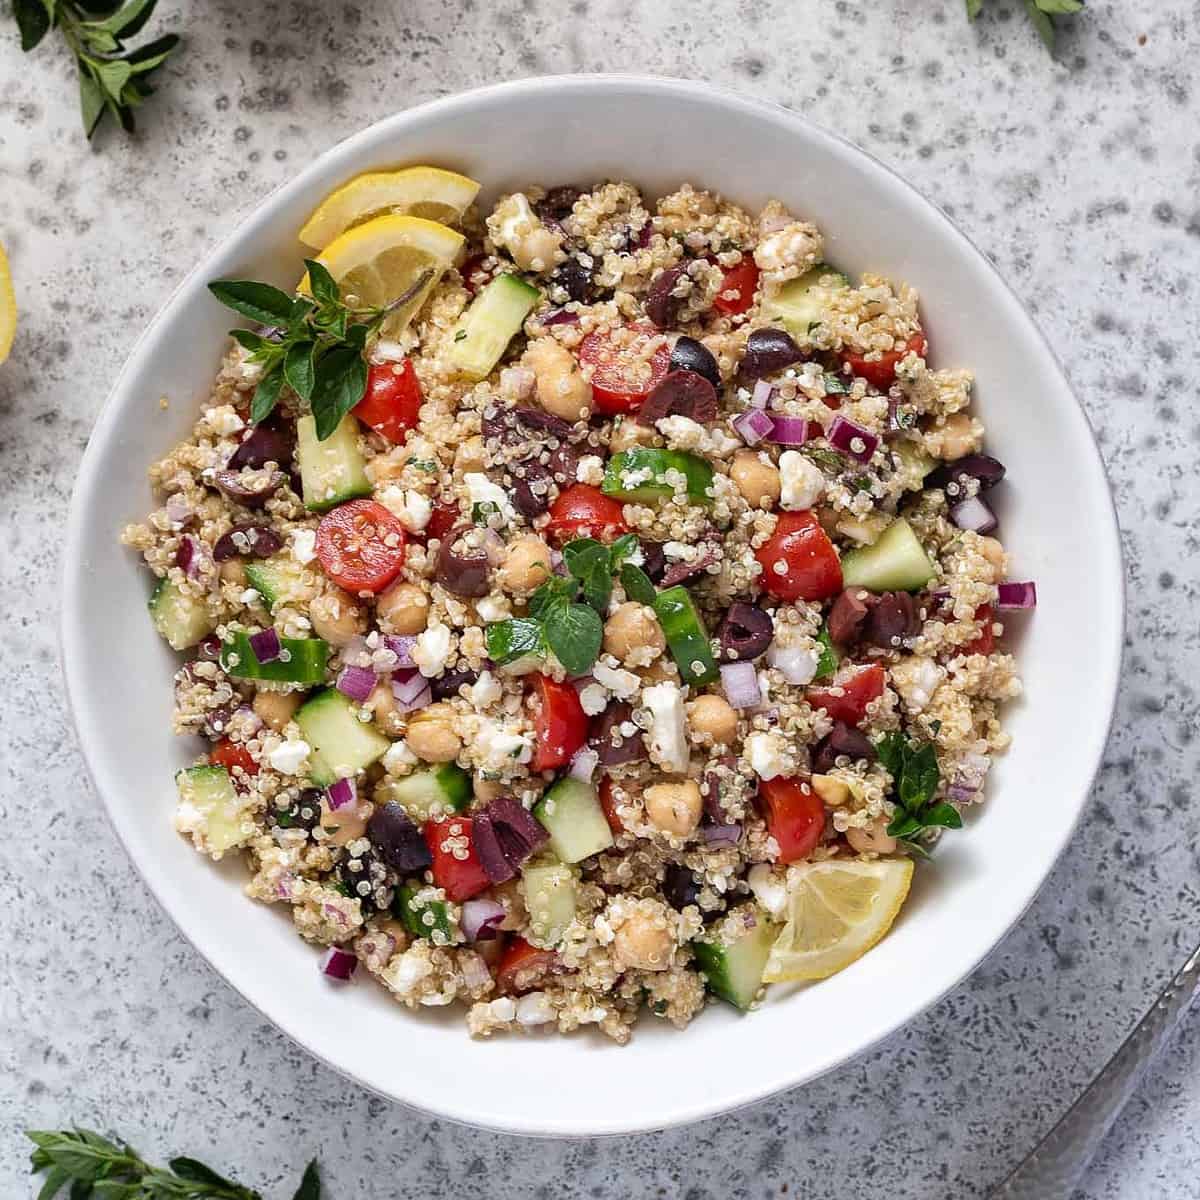  Quinoa, the versatile grain, meets the flavors of the Mediterranean in this salad.